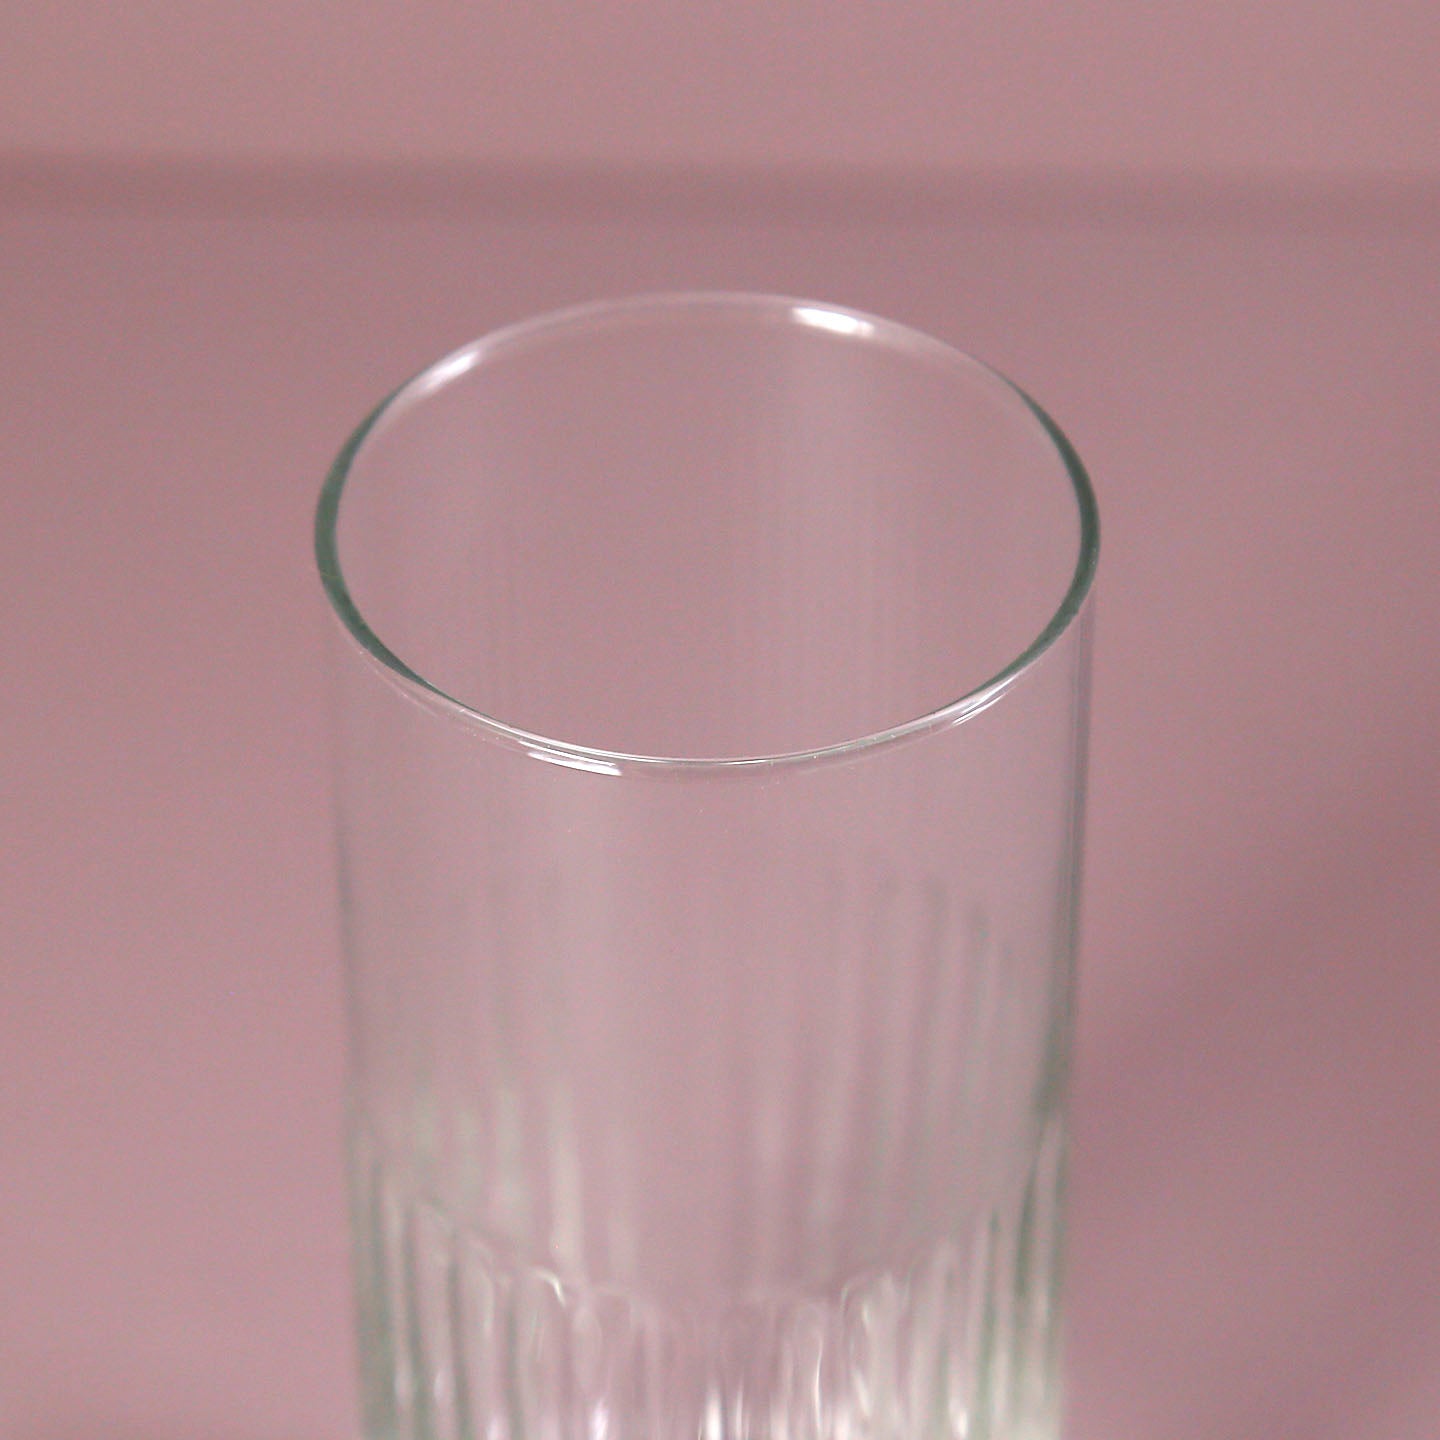 LAV Drinking Glasses Set of 18 - Clear Multipurpose Assorted Glassware Set